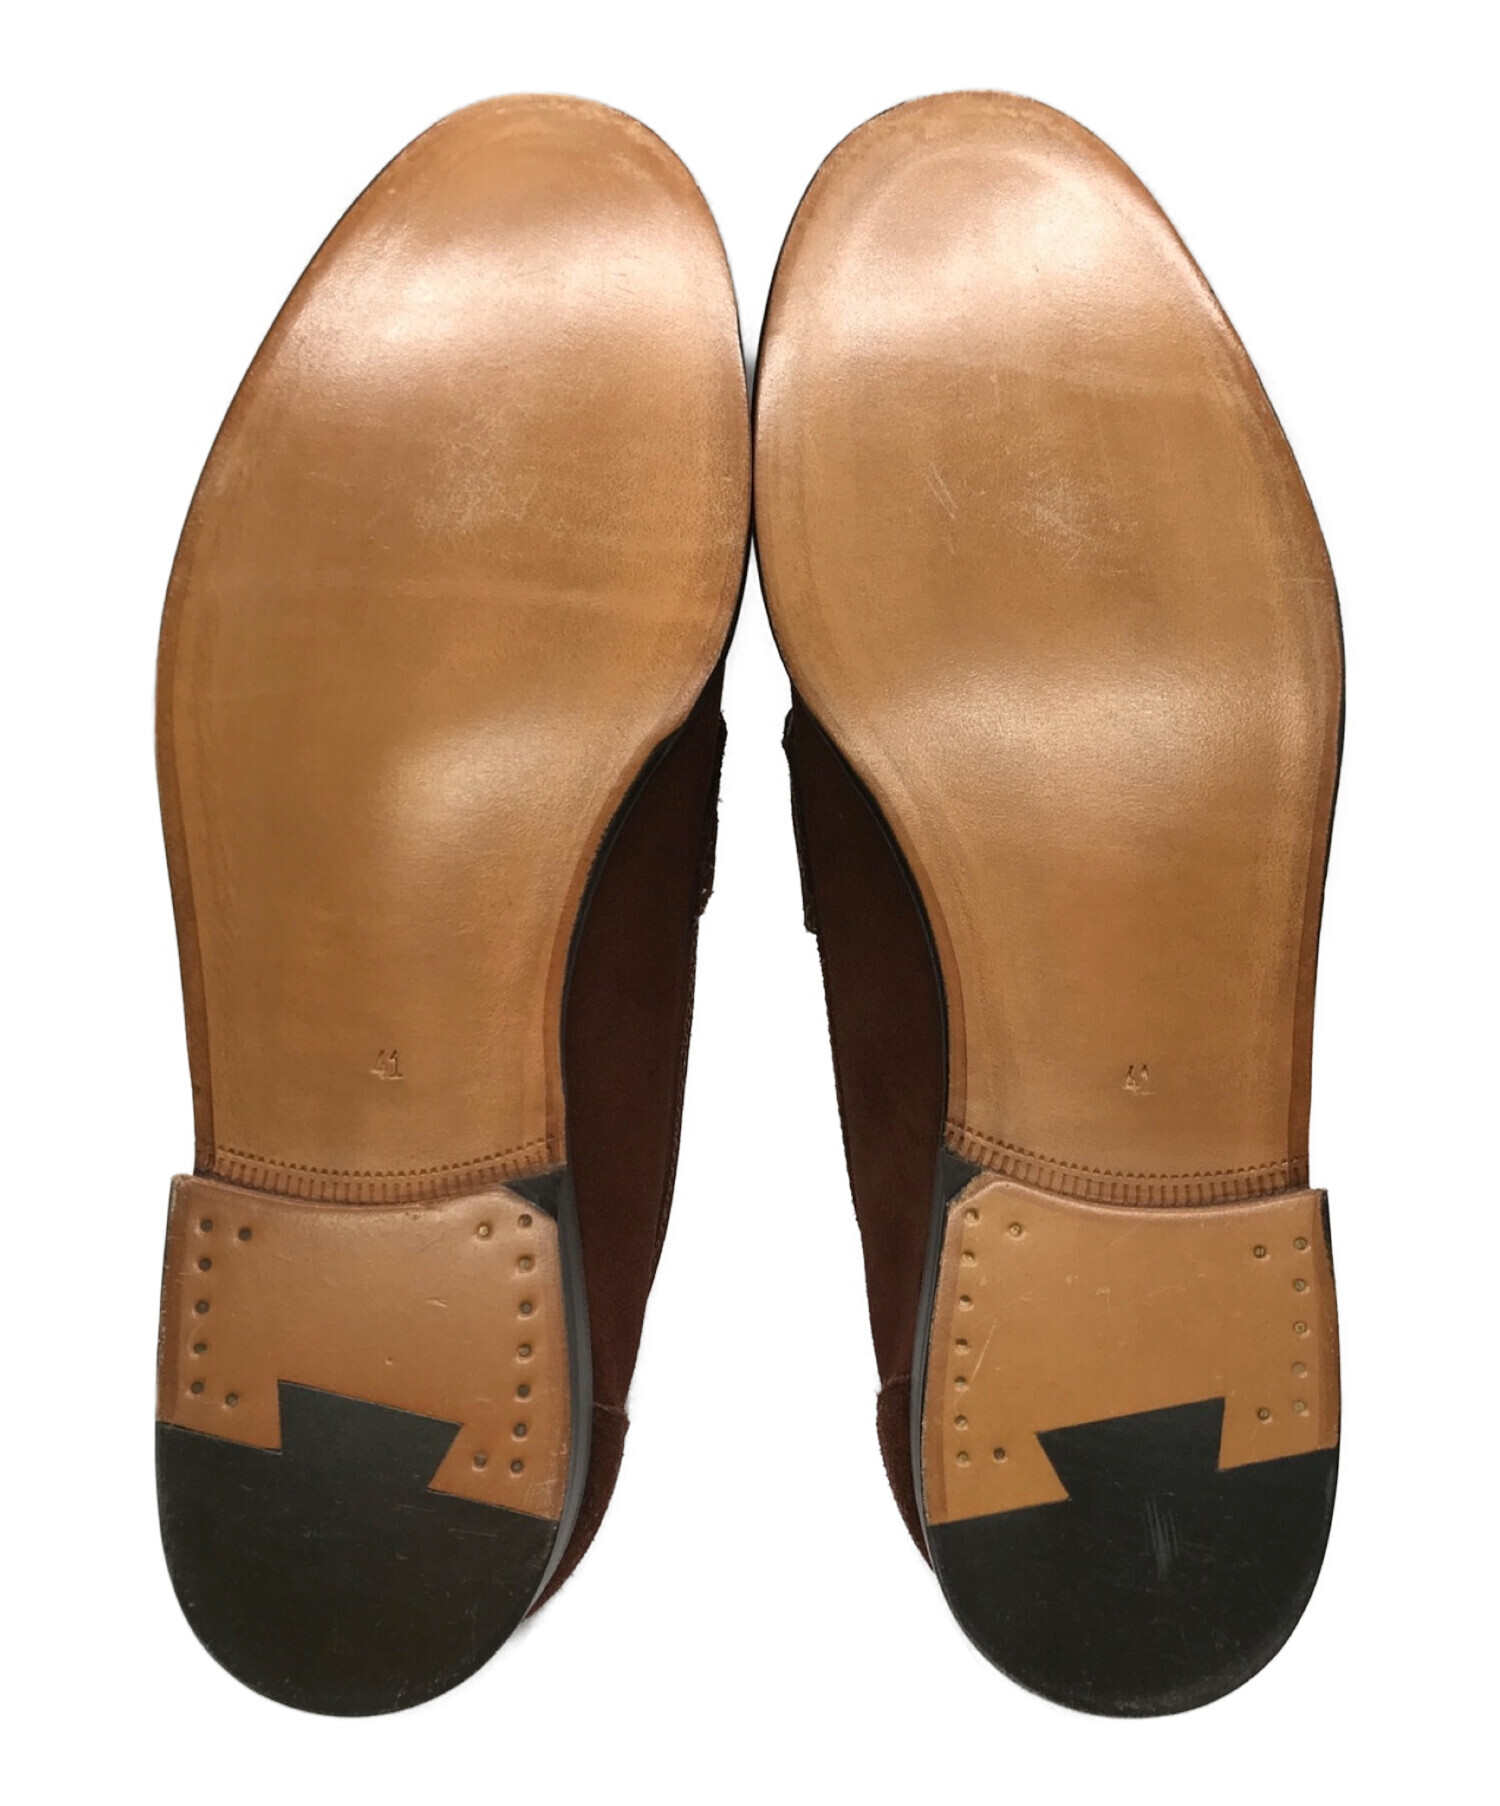 F.lli.Giacometti ブーツ EU35 1/2(22cm位) 茶 【古着】【】 - 靴/シューズ